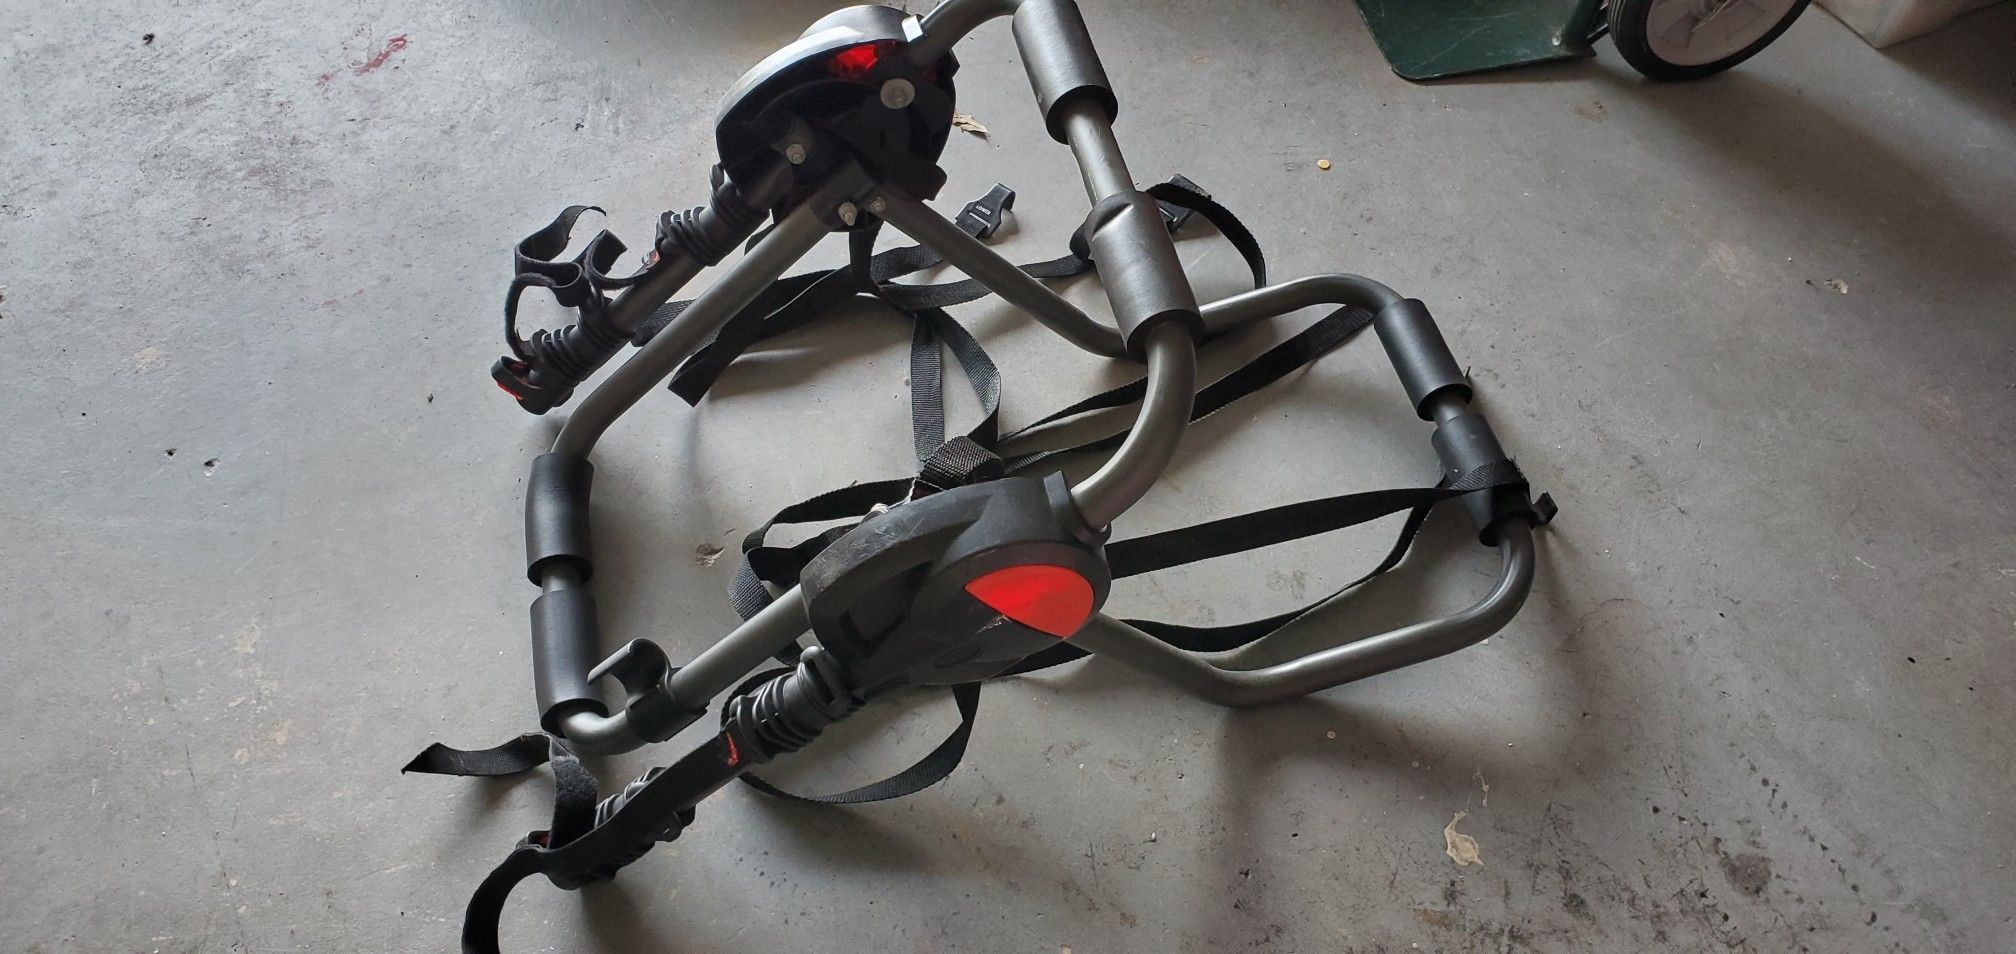 bikes holder/ rack up 2 bike